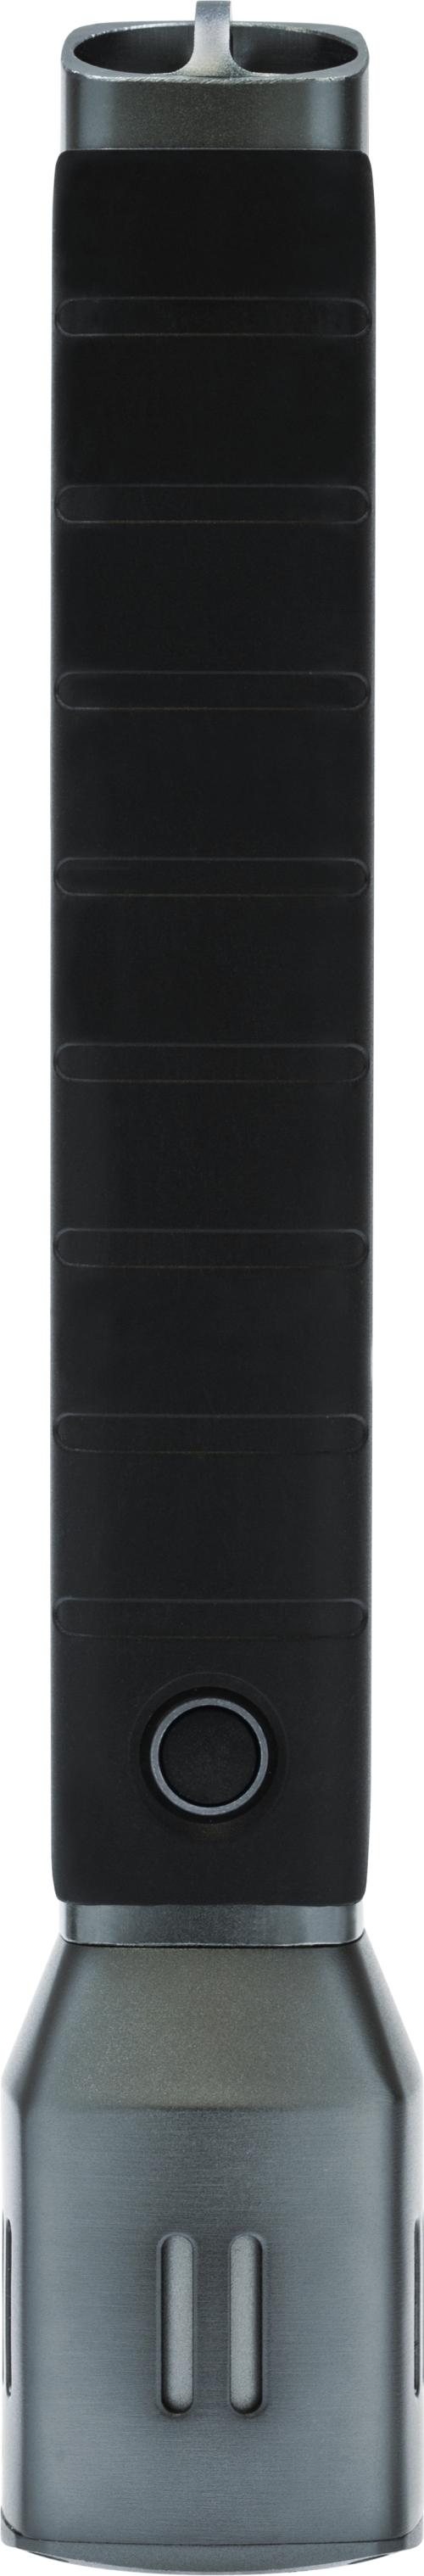 Flashlight TL-525, 25.5 cm